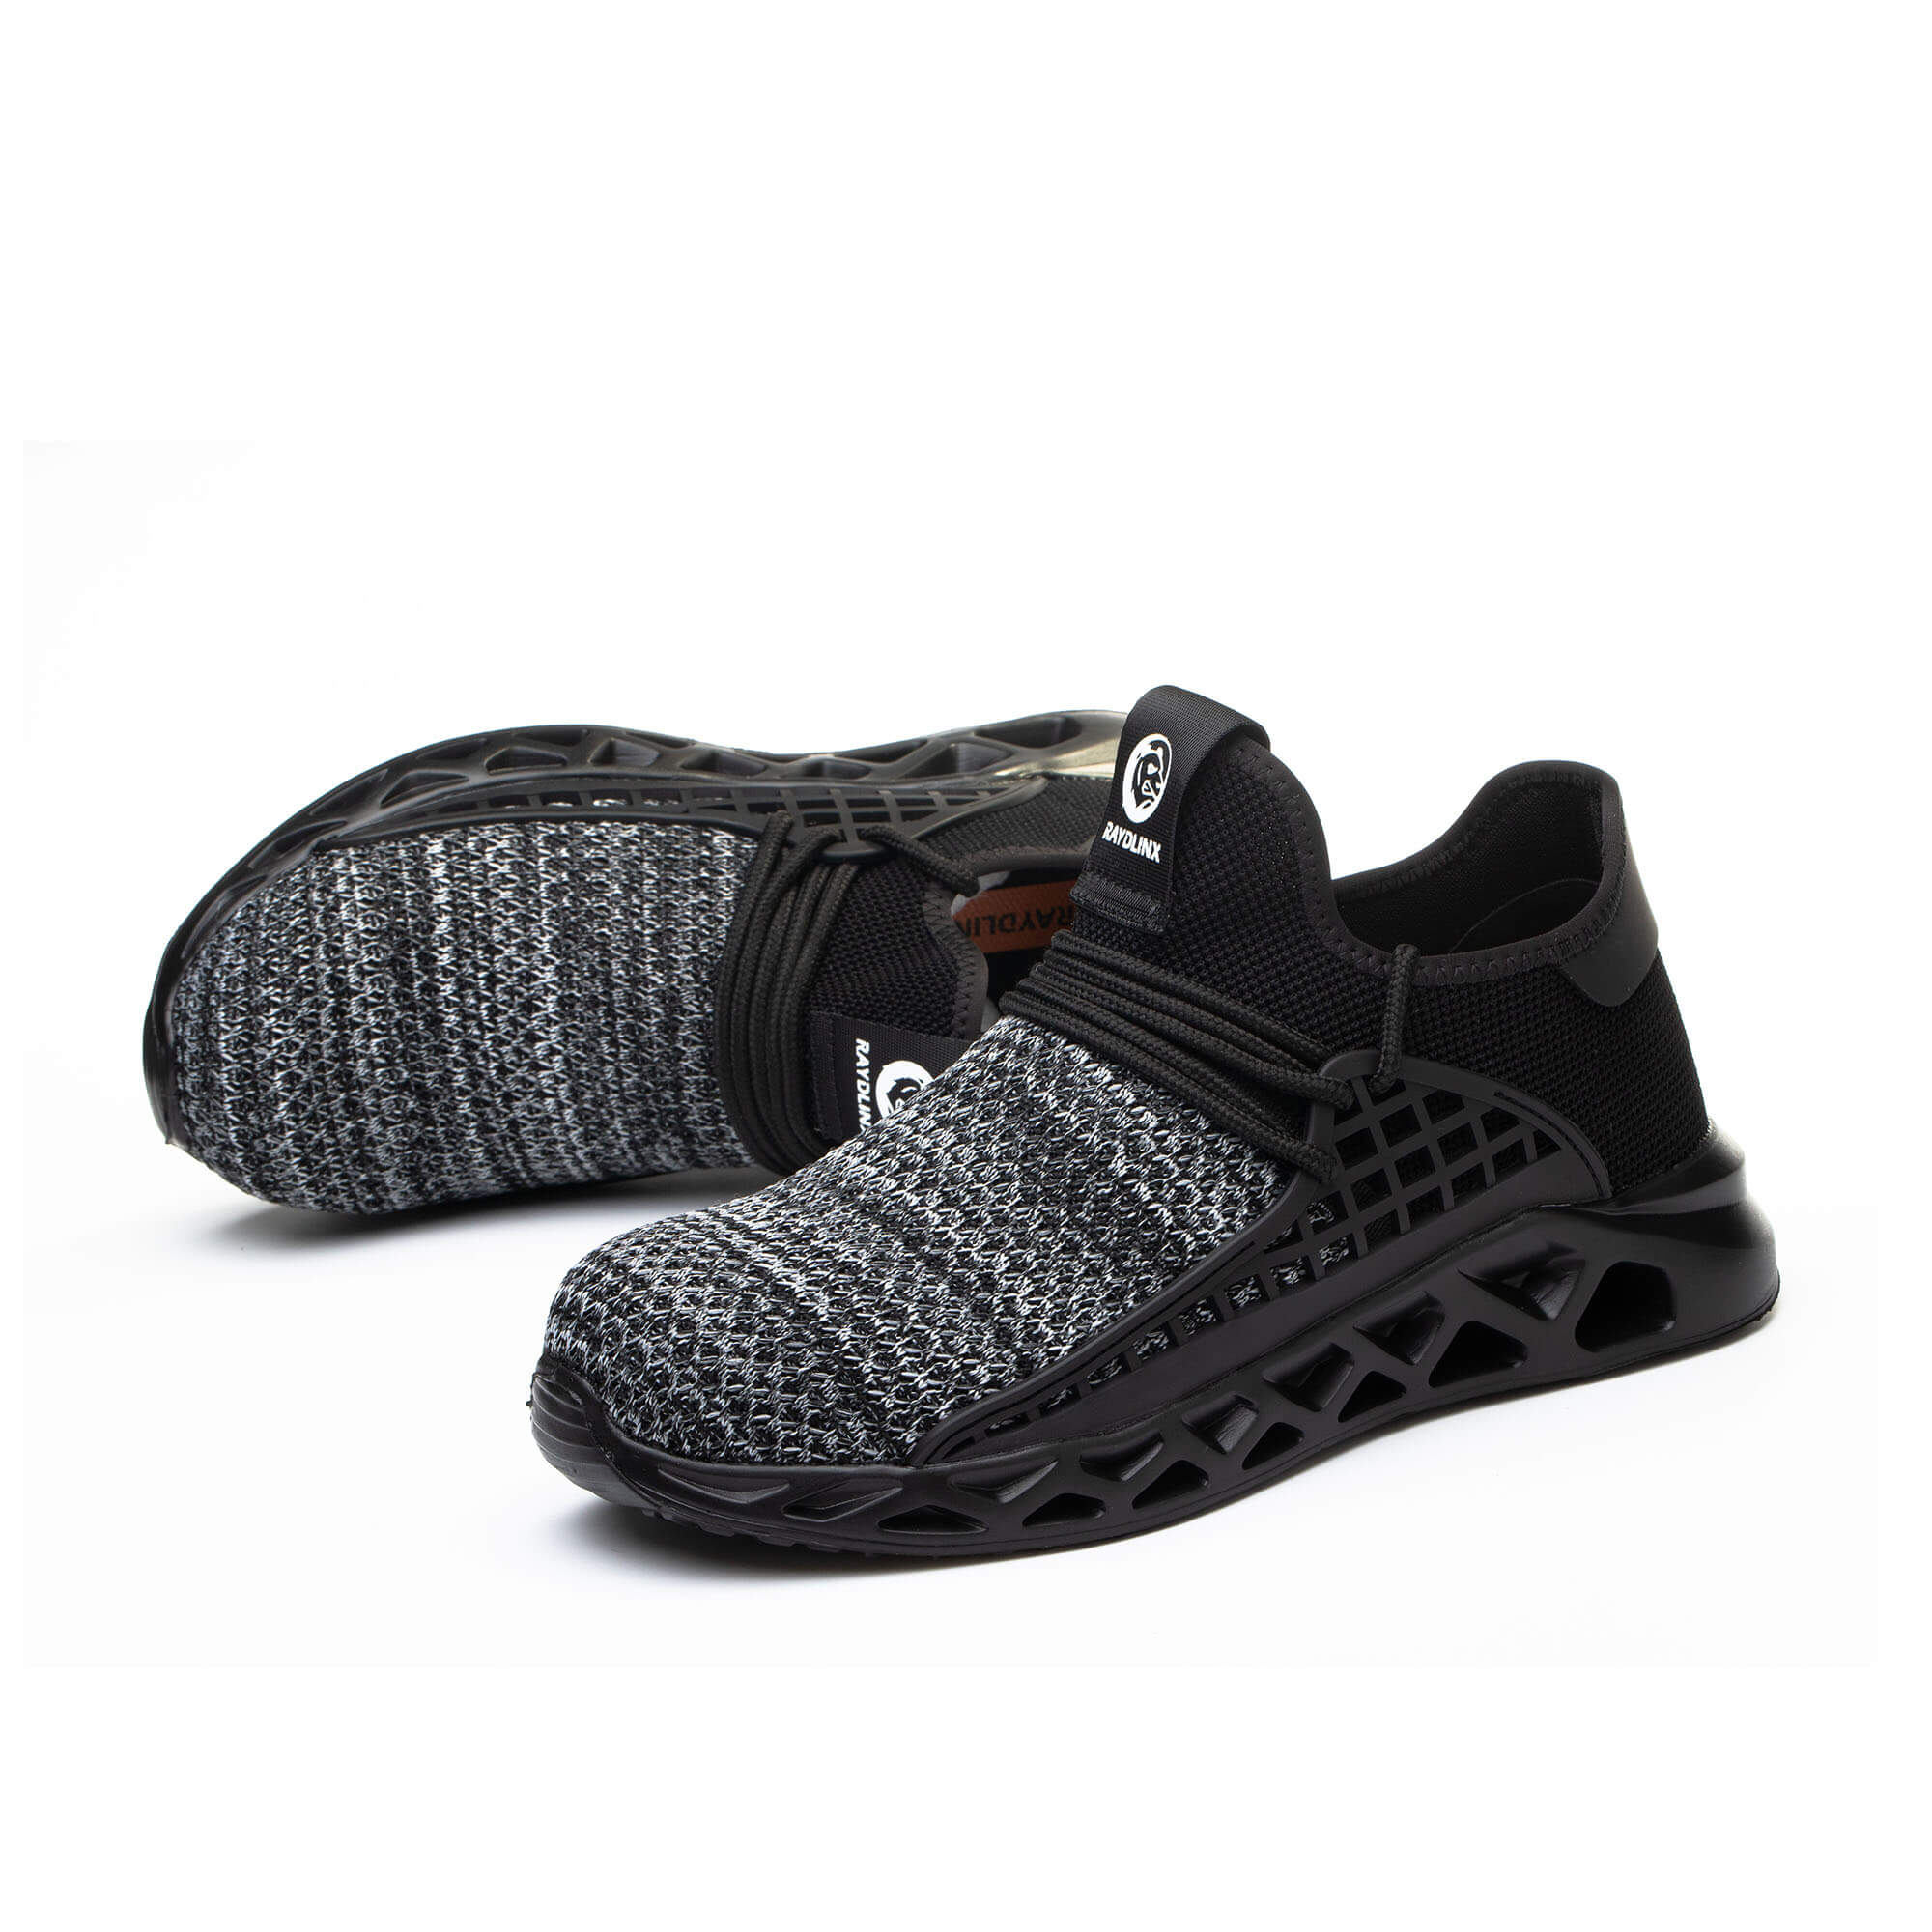 T06 Steel Toe Safety Shoes Lightweight for Men Women